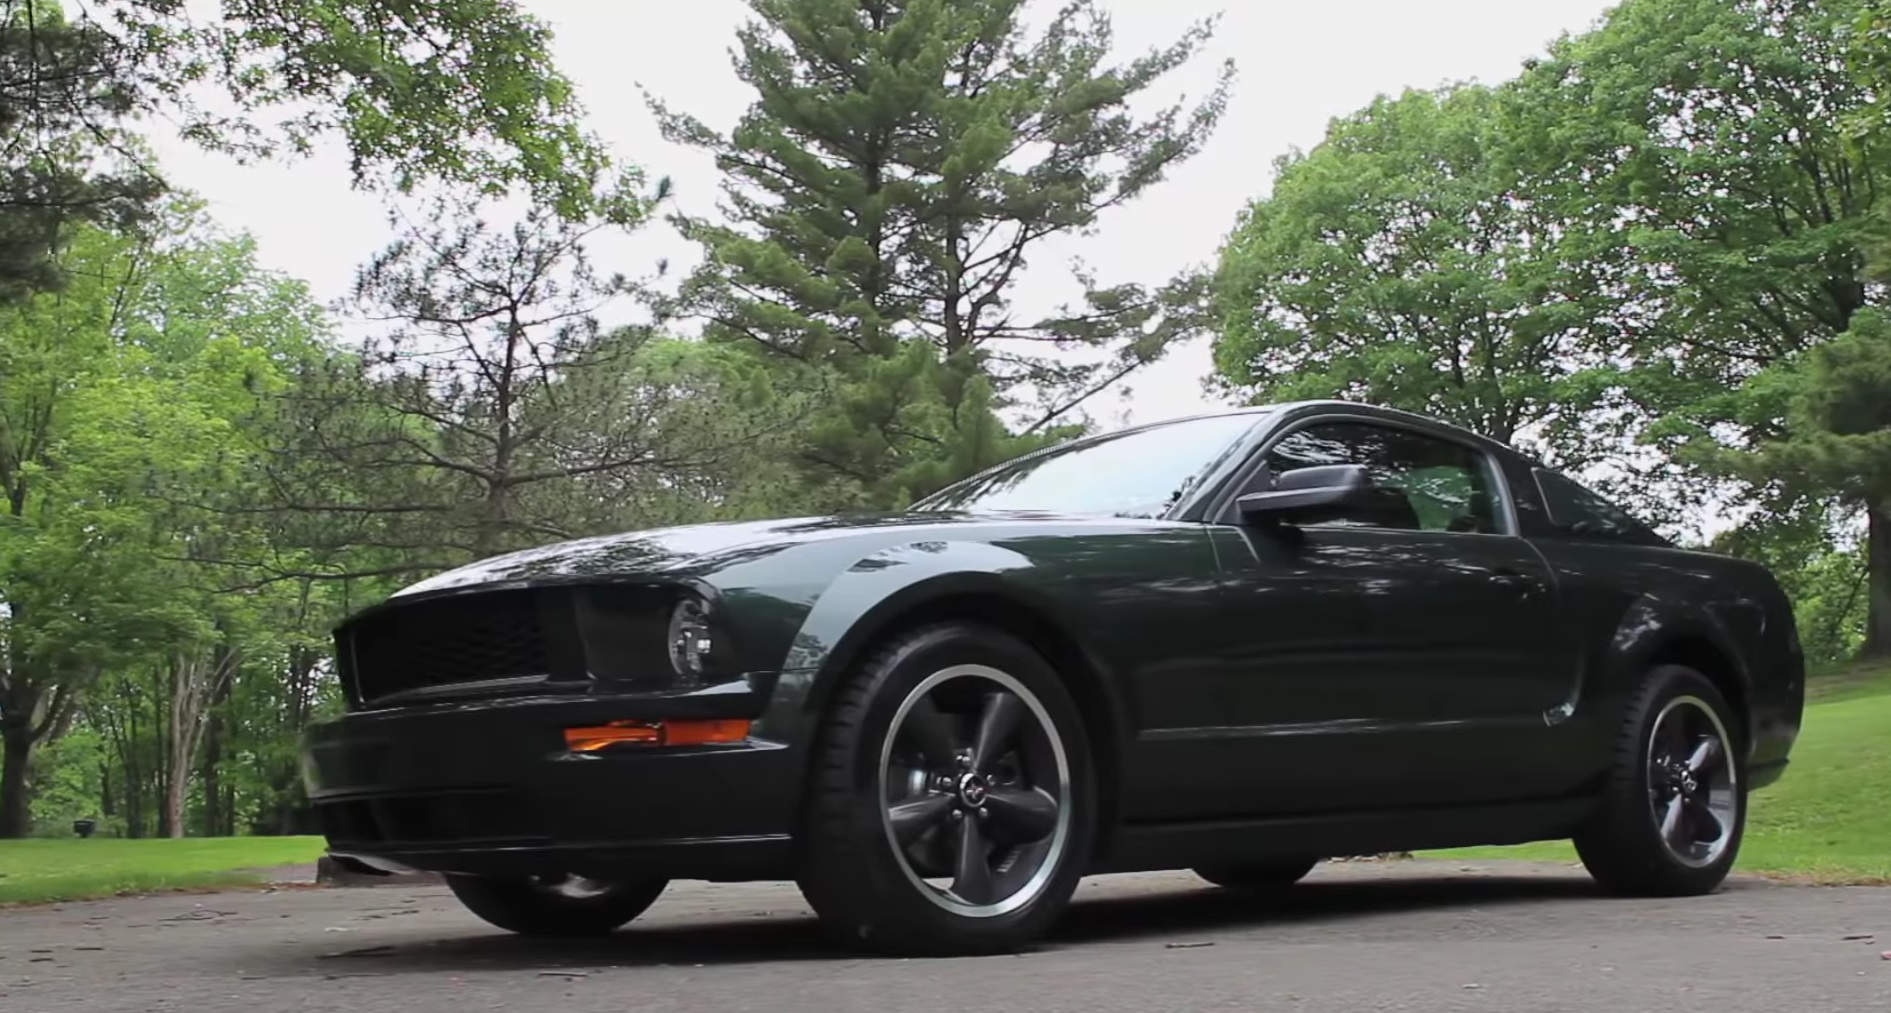 Video: 2008 Ford Mustang Bullitt In-Depth Review